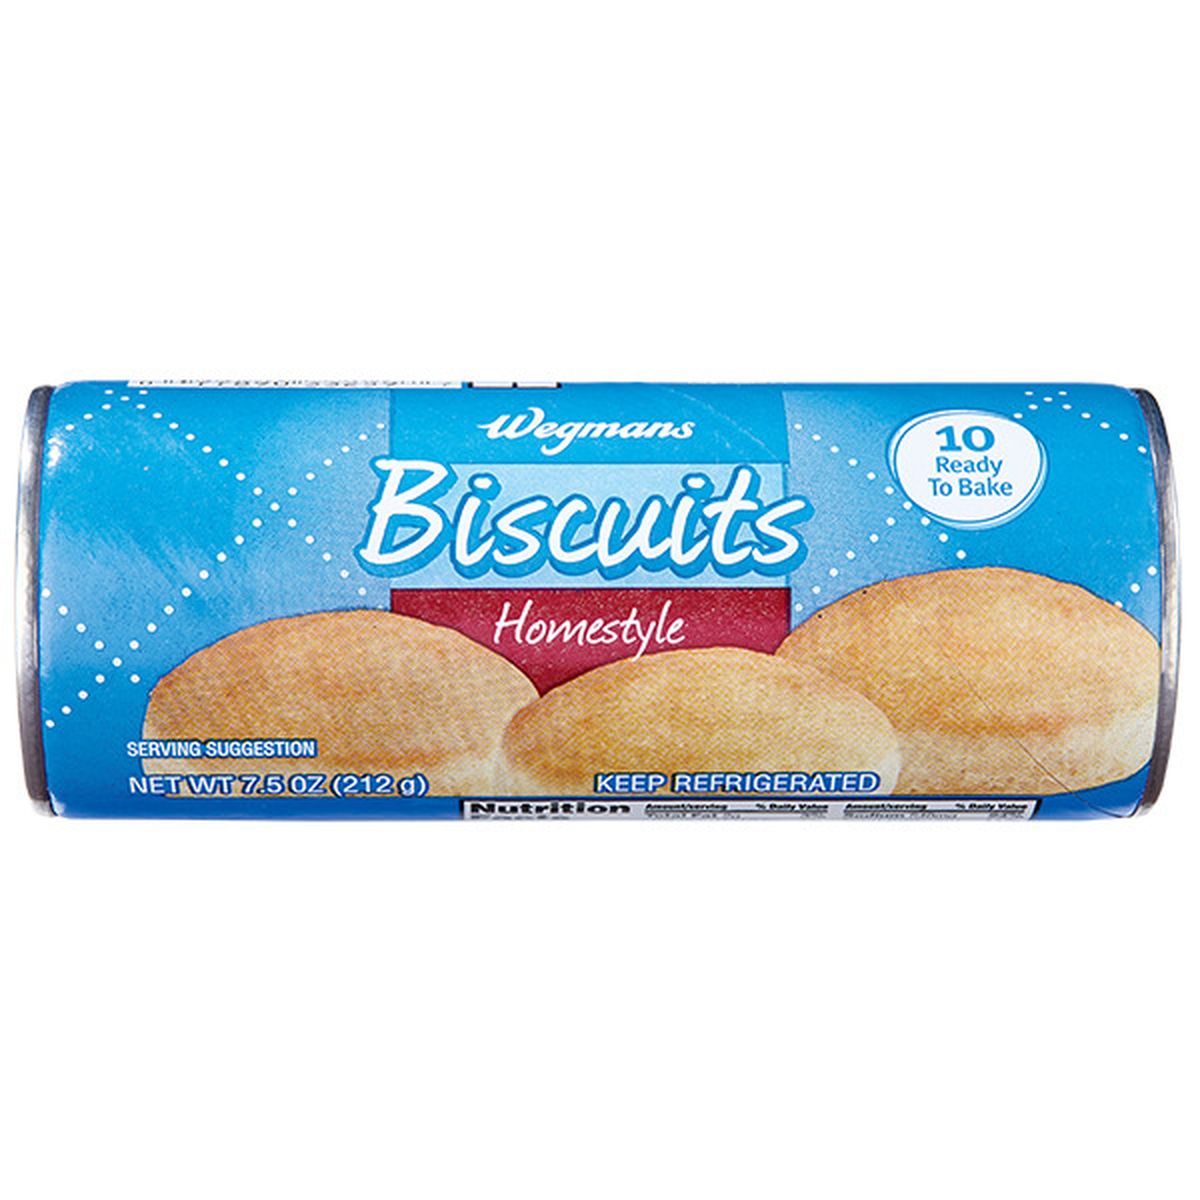 Calories in Wegmans Homestyle Biscuits